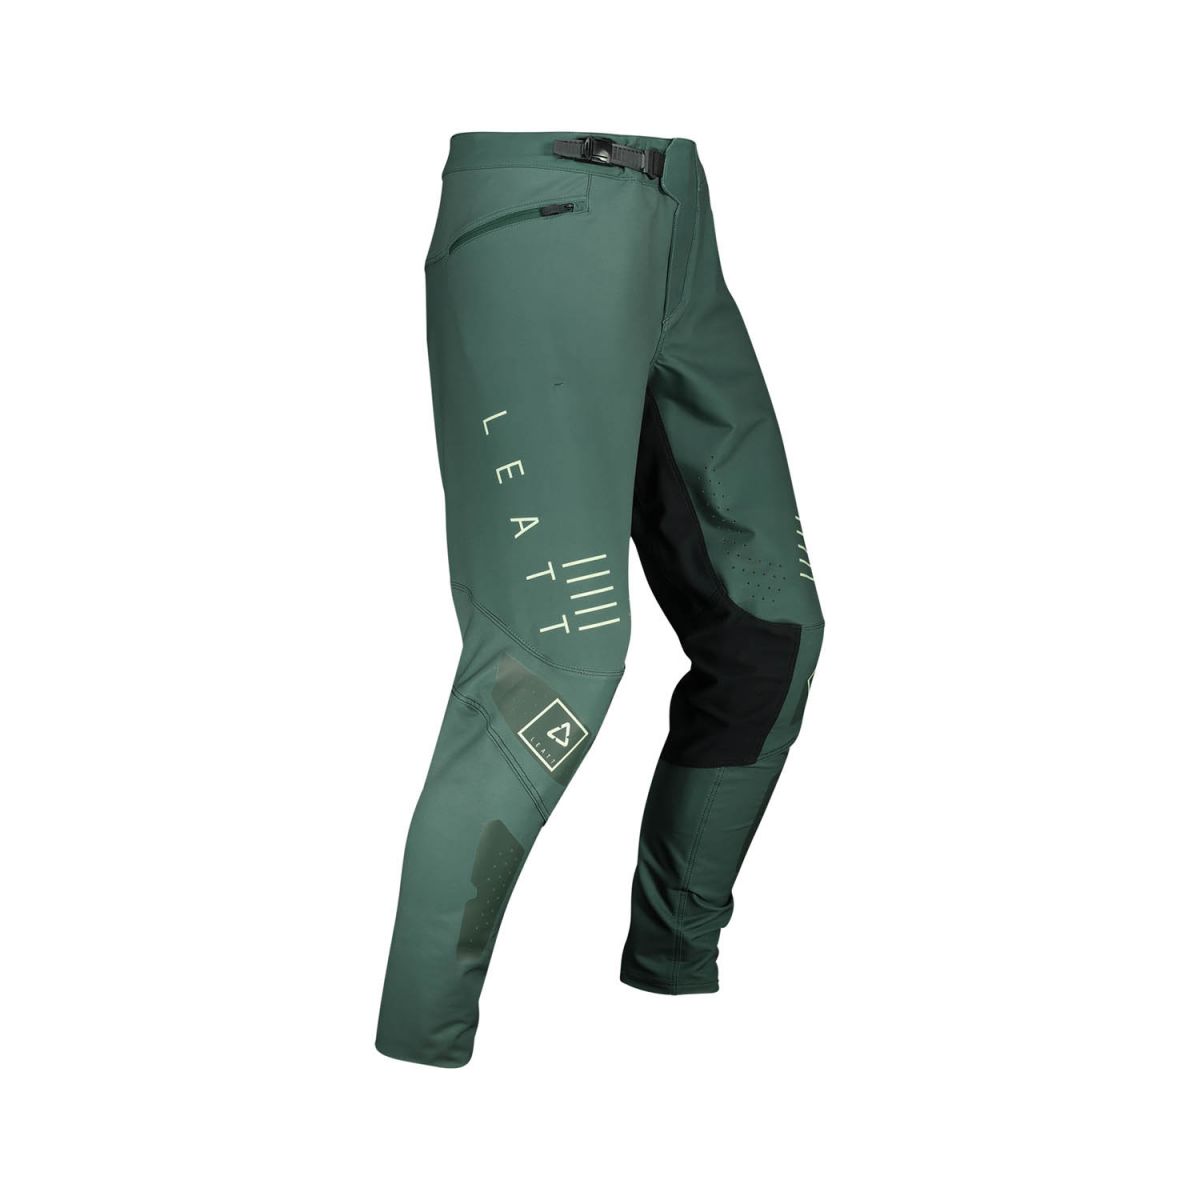 Pantalones largos Leatt MTB 4.0 gravity | Color verde ivy | the bike village | tienda enduro | descenso | barcelona | mataró